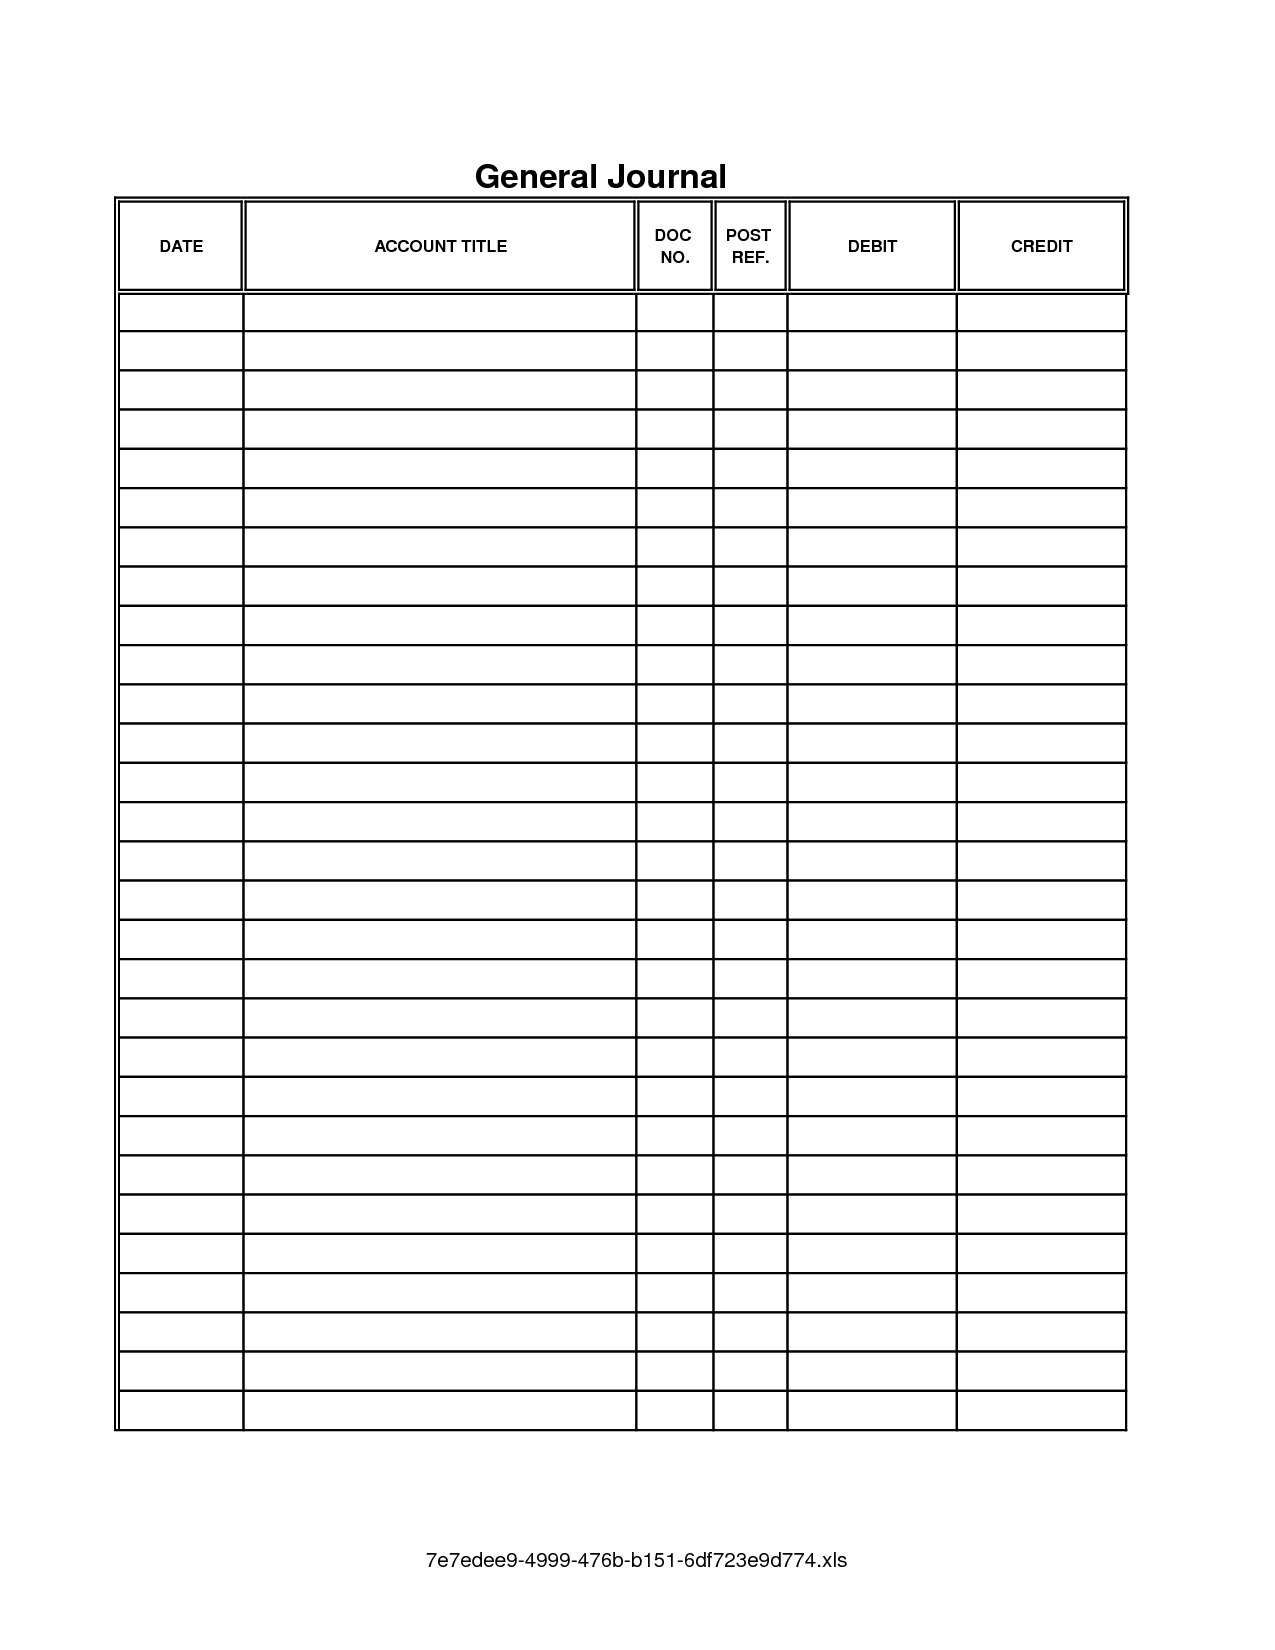 Printables Journal Entry Worksheet journal entry worksheet abitlikethis of printable accounting templates general journal